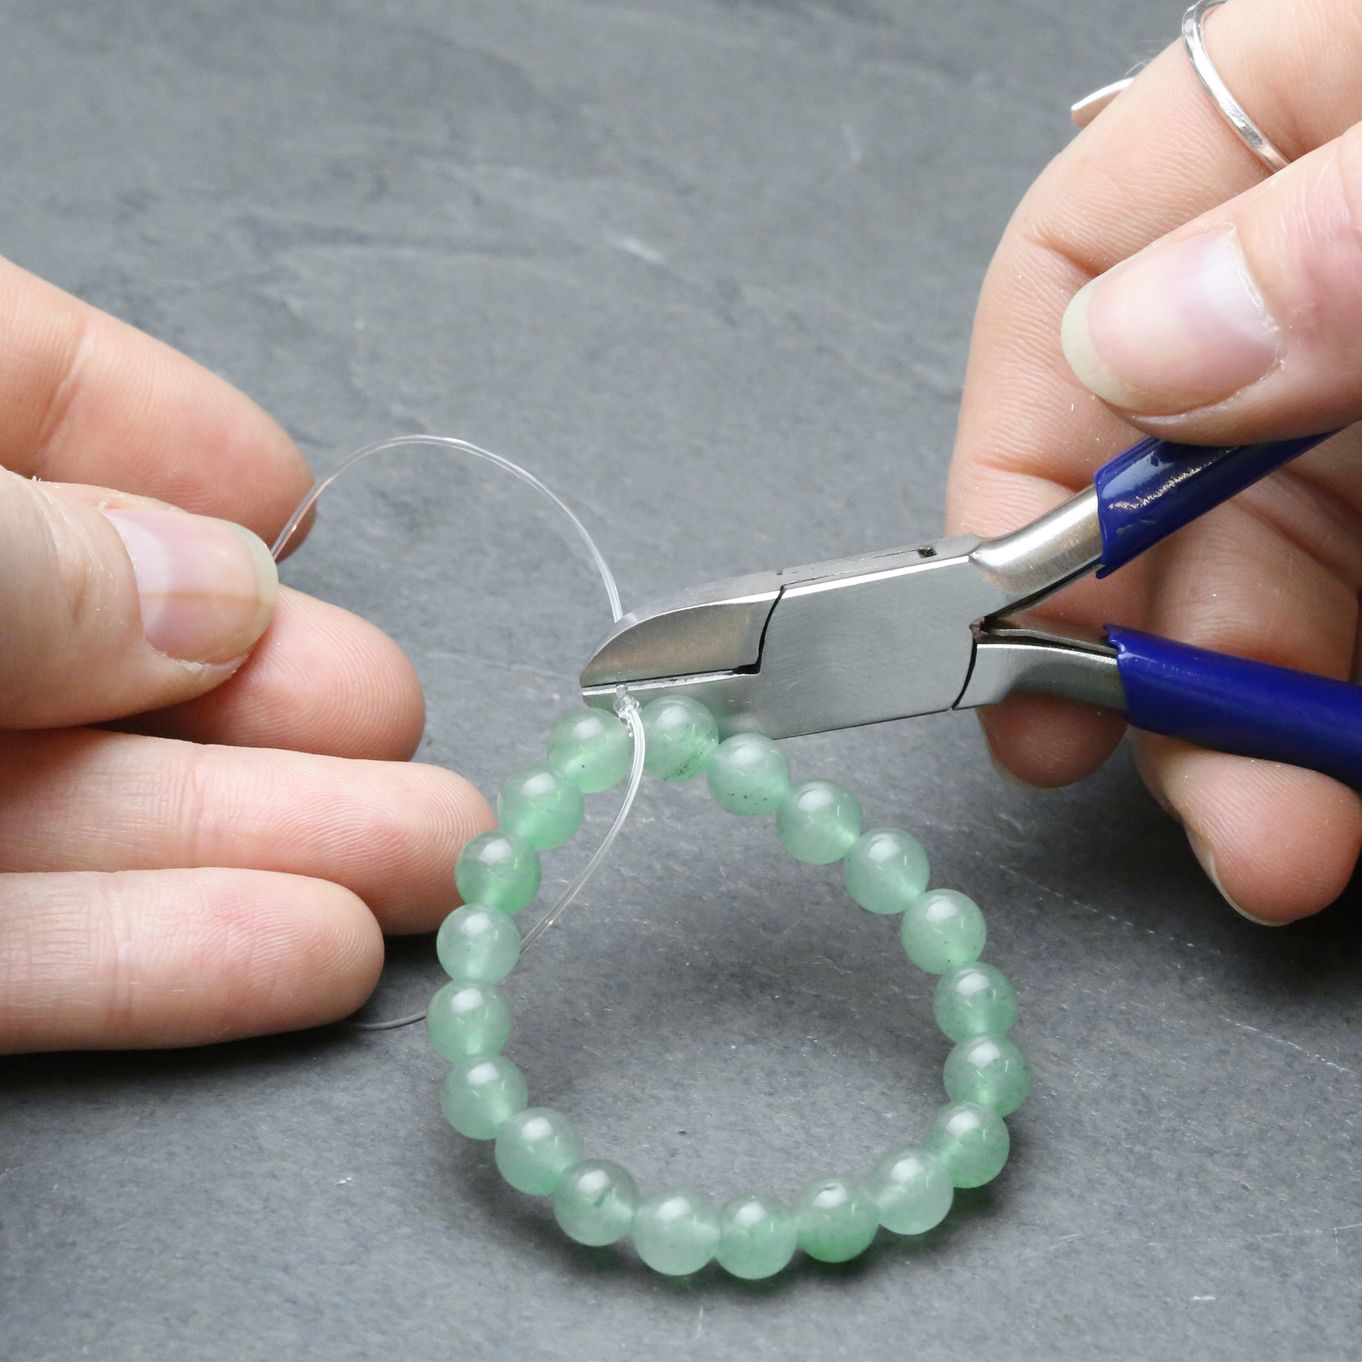 How To Make An Elastic Bracelet, Clear Stretch Magic